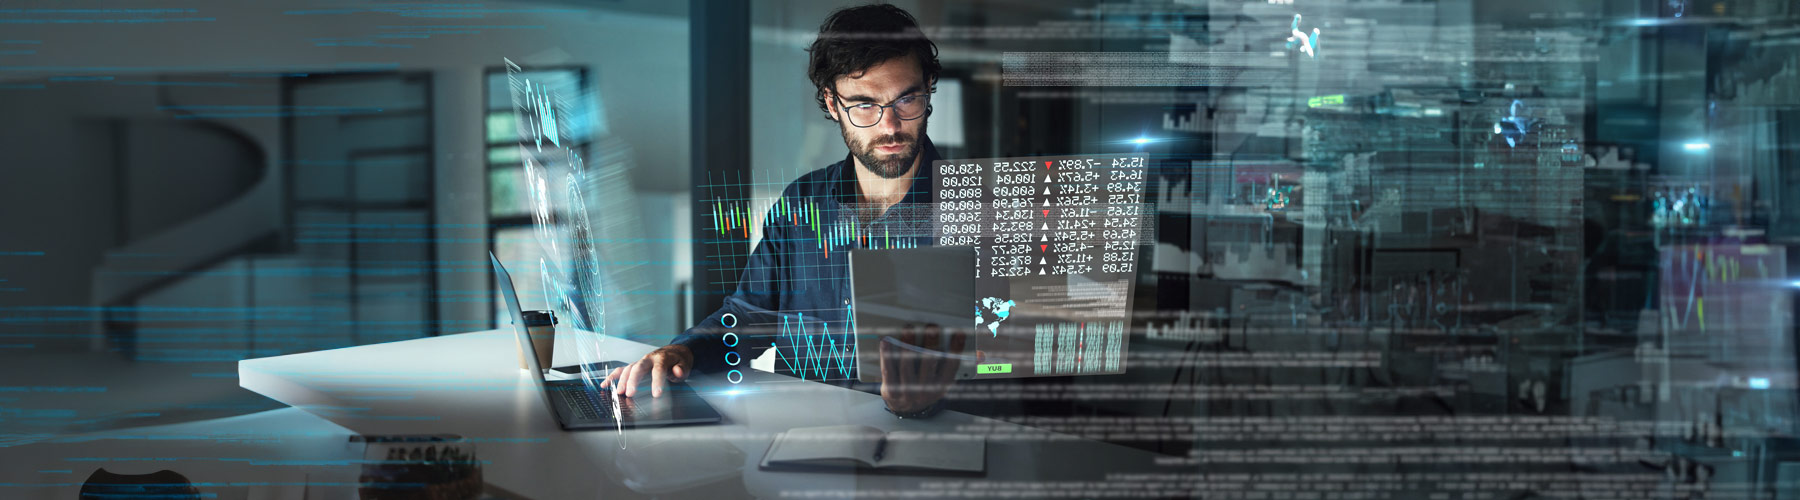 A man trading stocks at a computer terminal